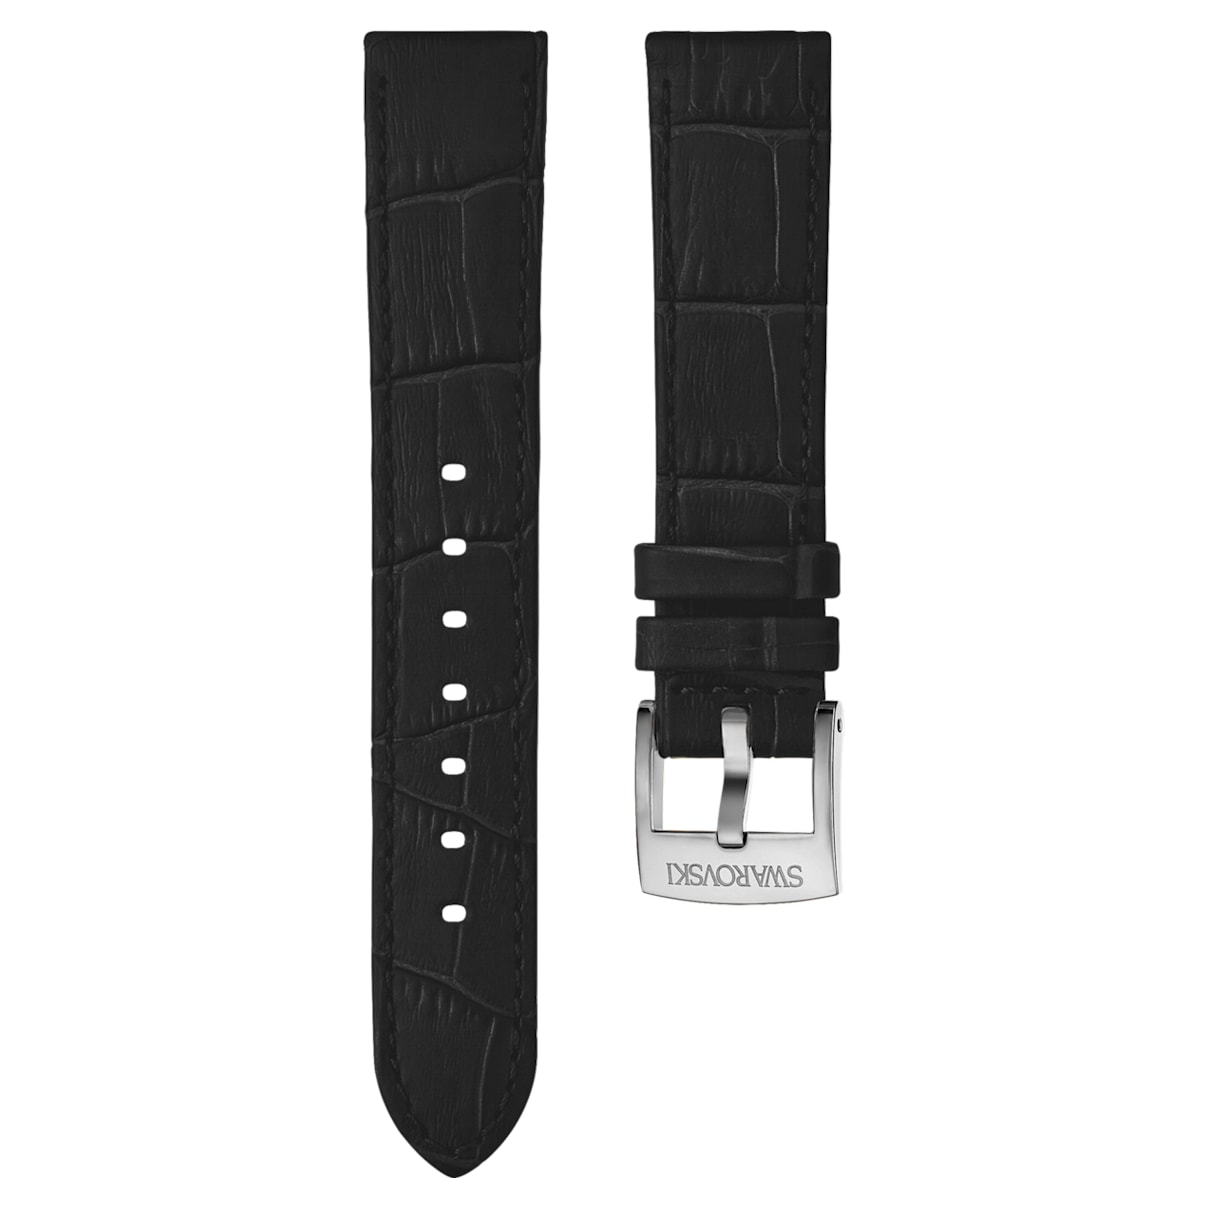 Cinturino per orologio 20mm, pelle con impunture, nero, acciaio inossidabile